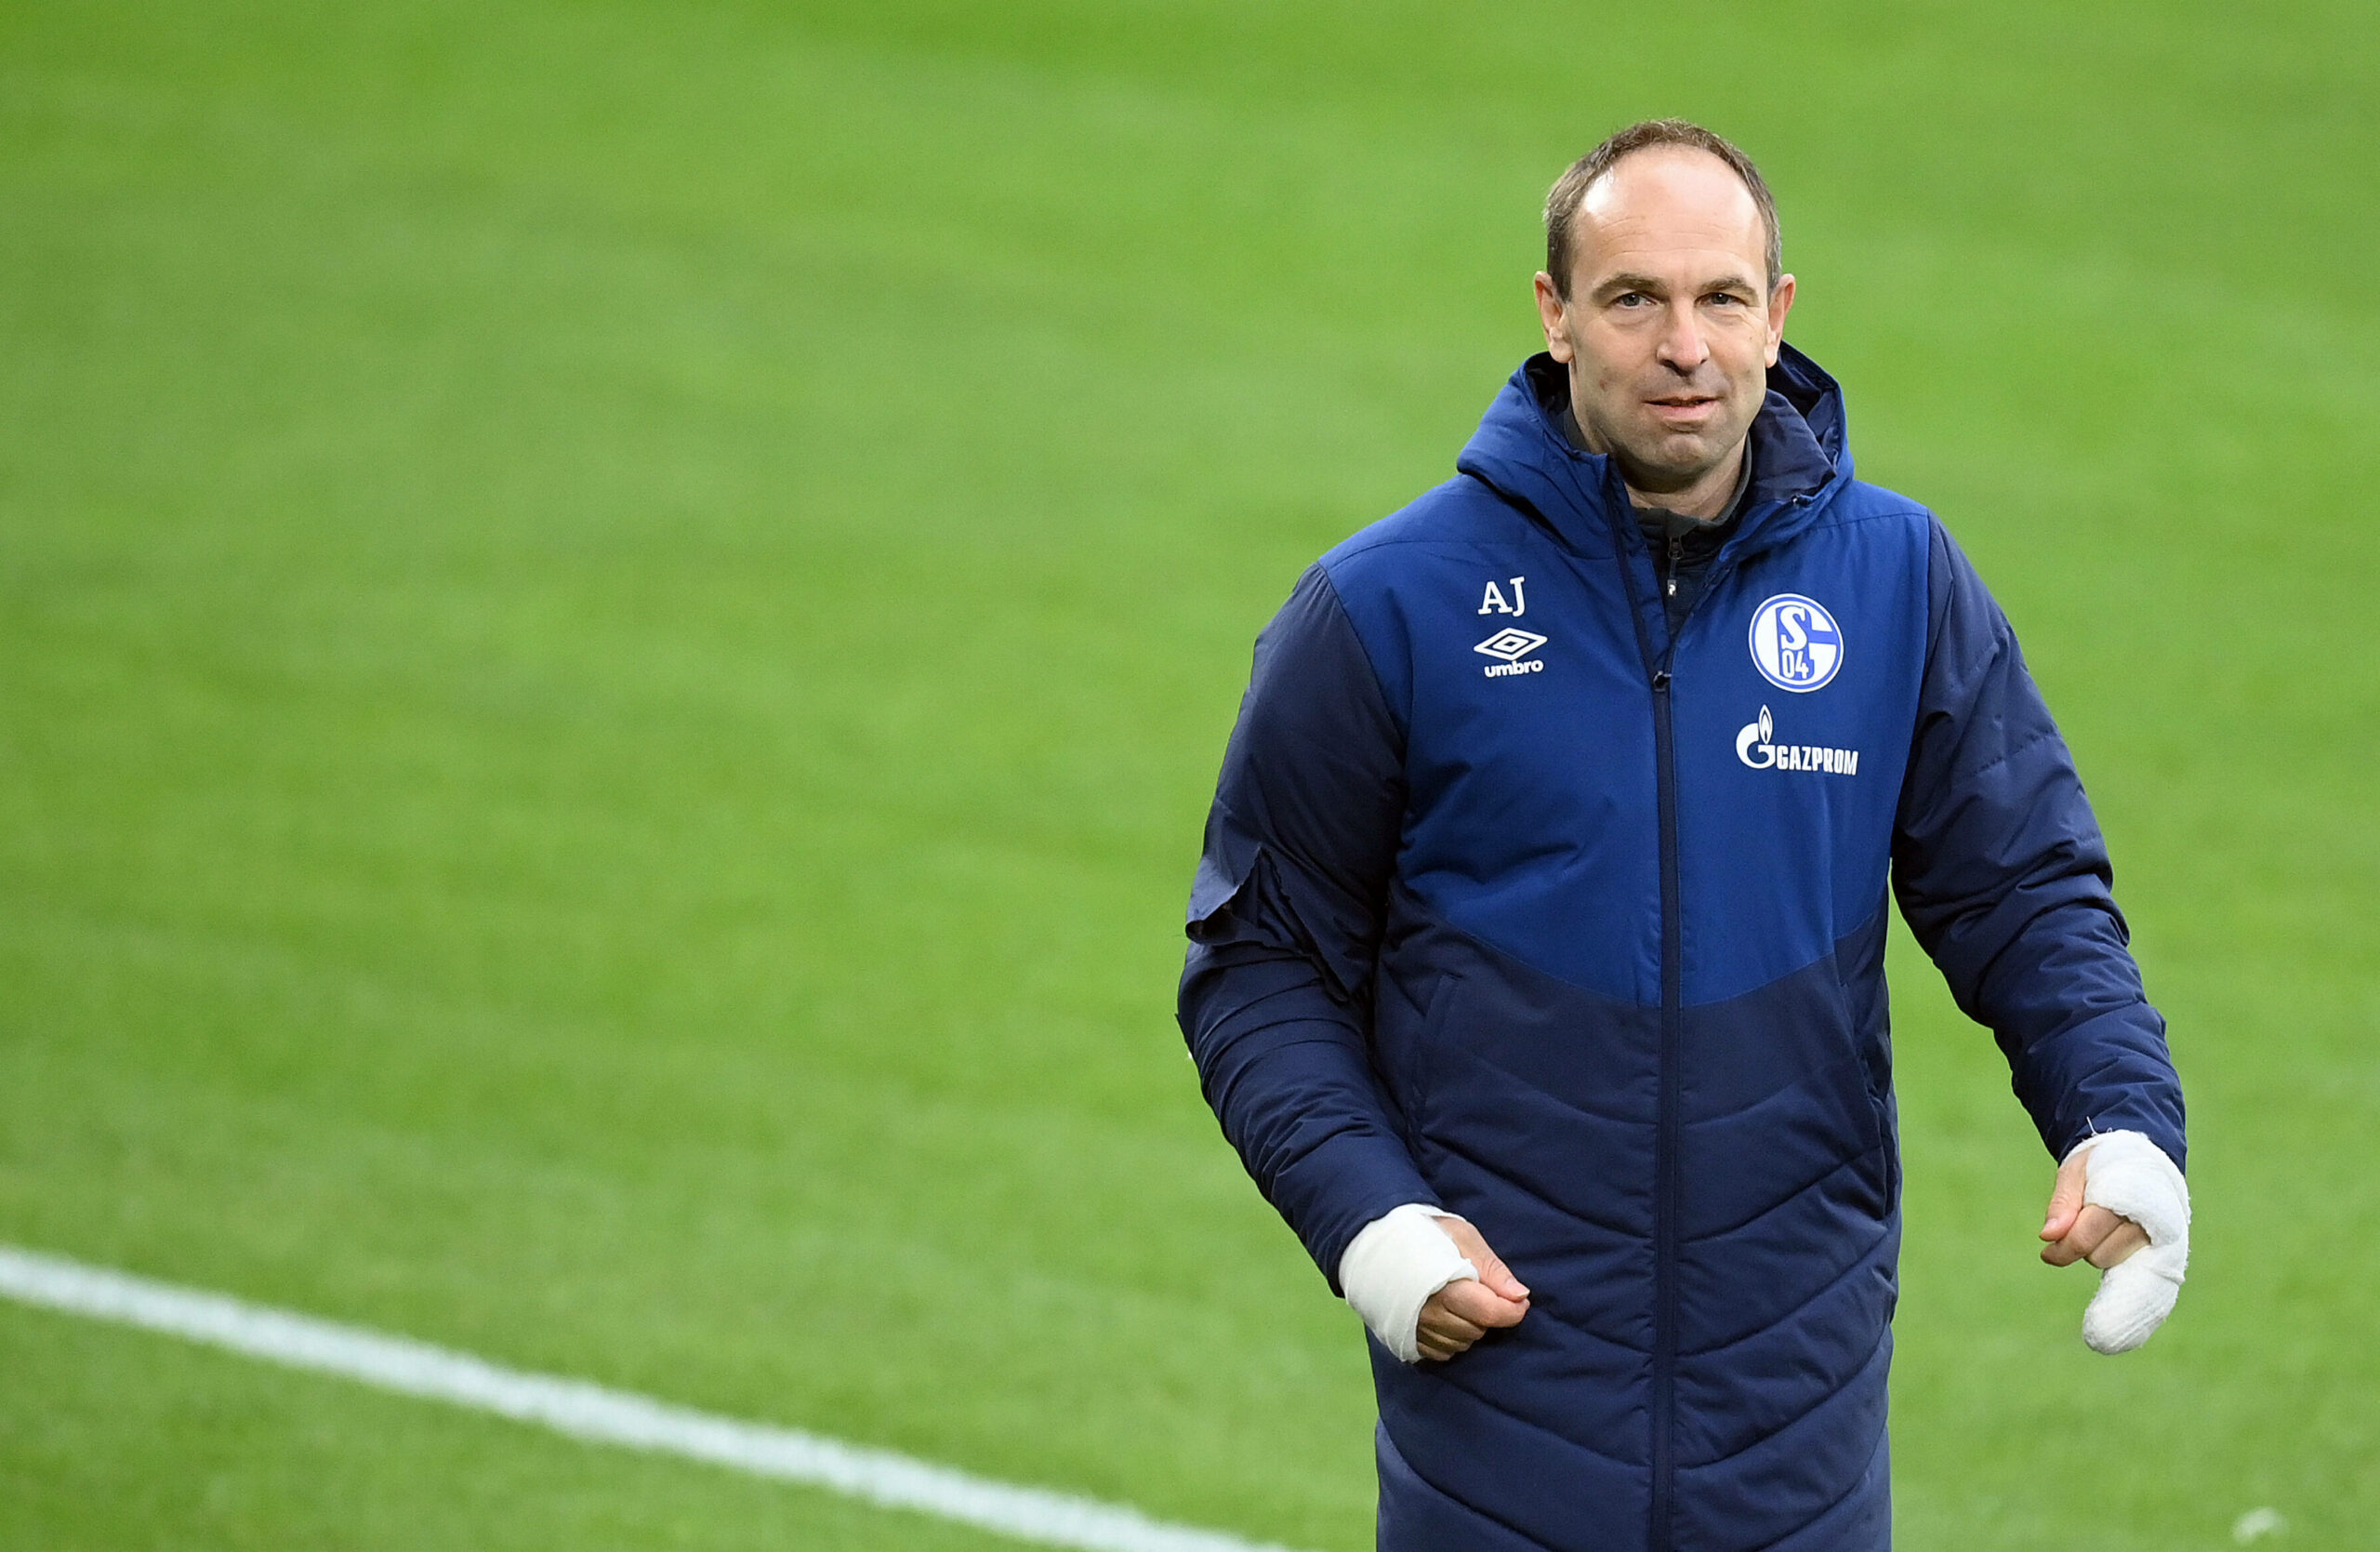 Schalke 04: Vorstandsmitglied Jobst legt Amt wegen Bedrohungen nieder